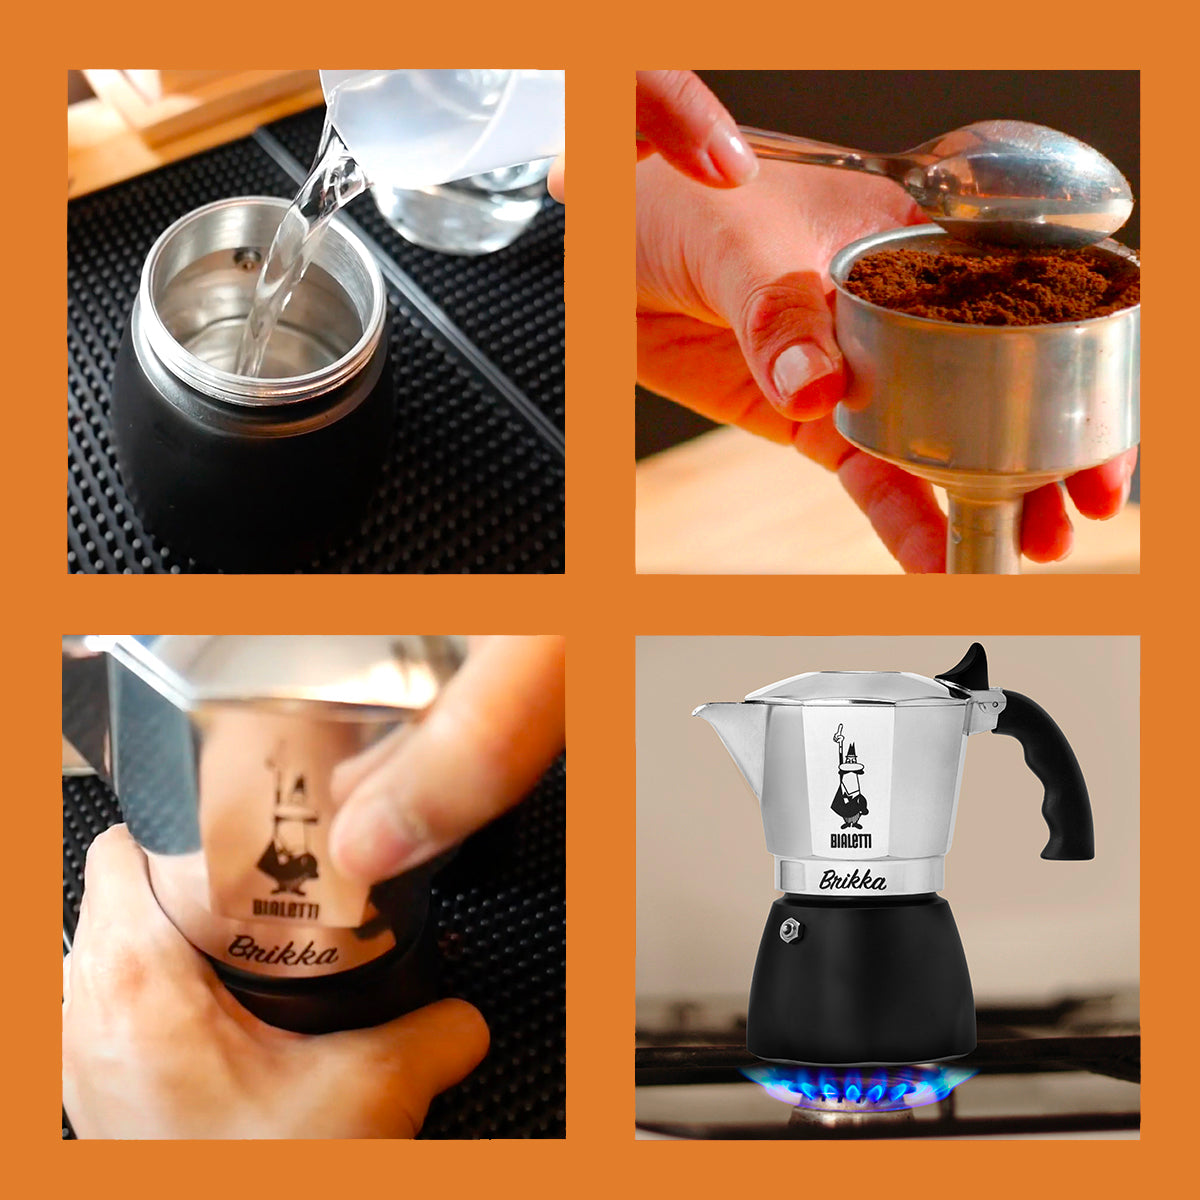 Bialetti Brikka 4 cups coffee maker that produce crema